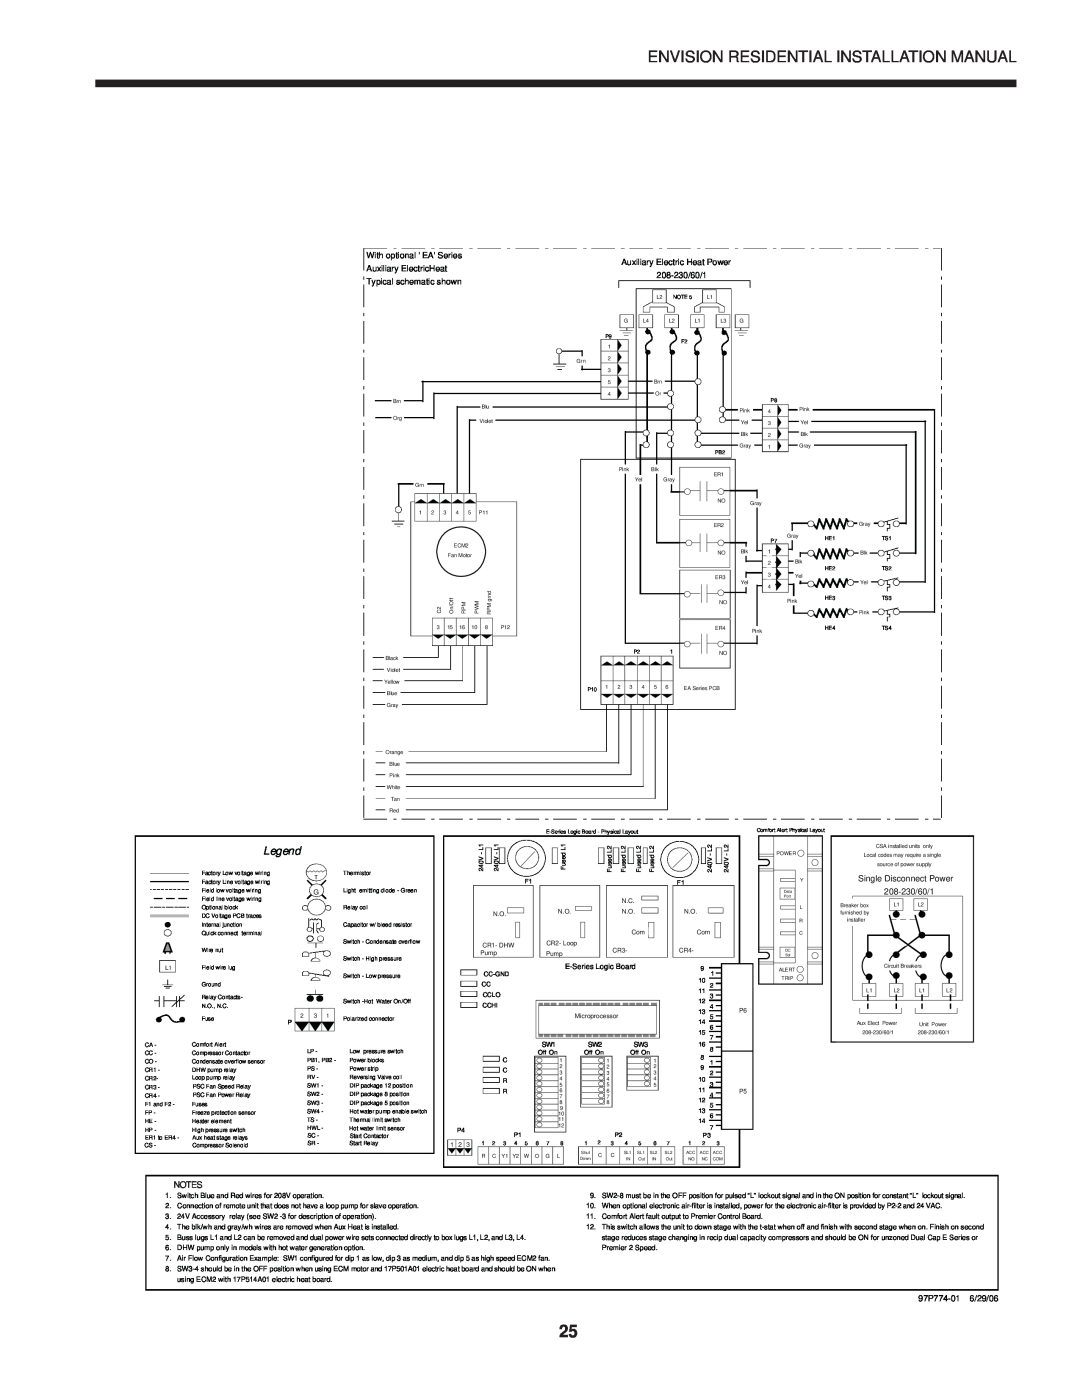 Envision Peripherals R-410A installation manual 